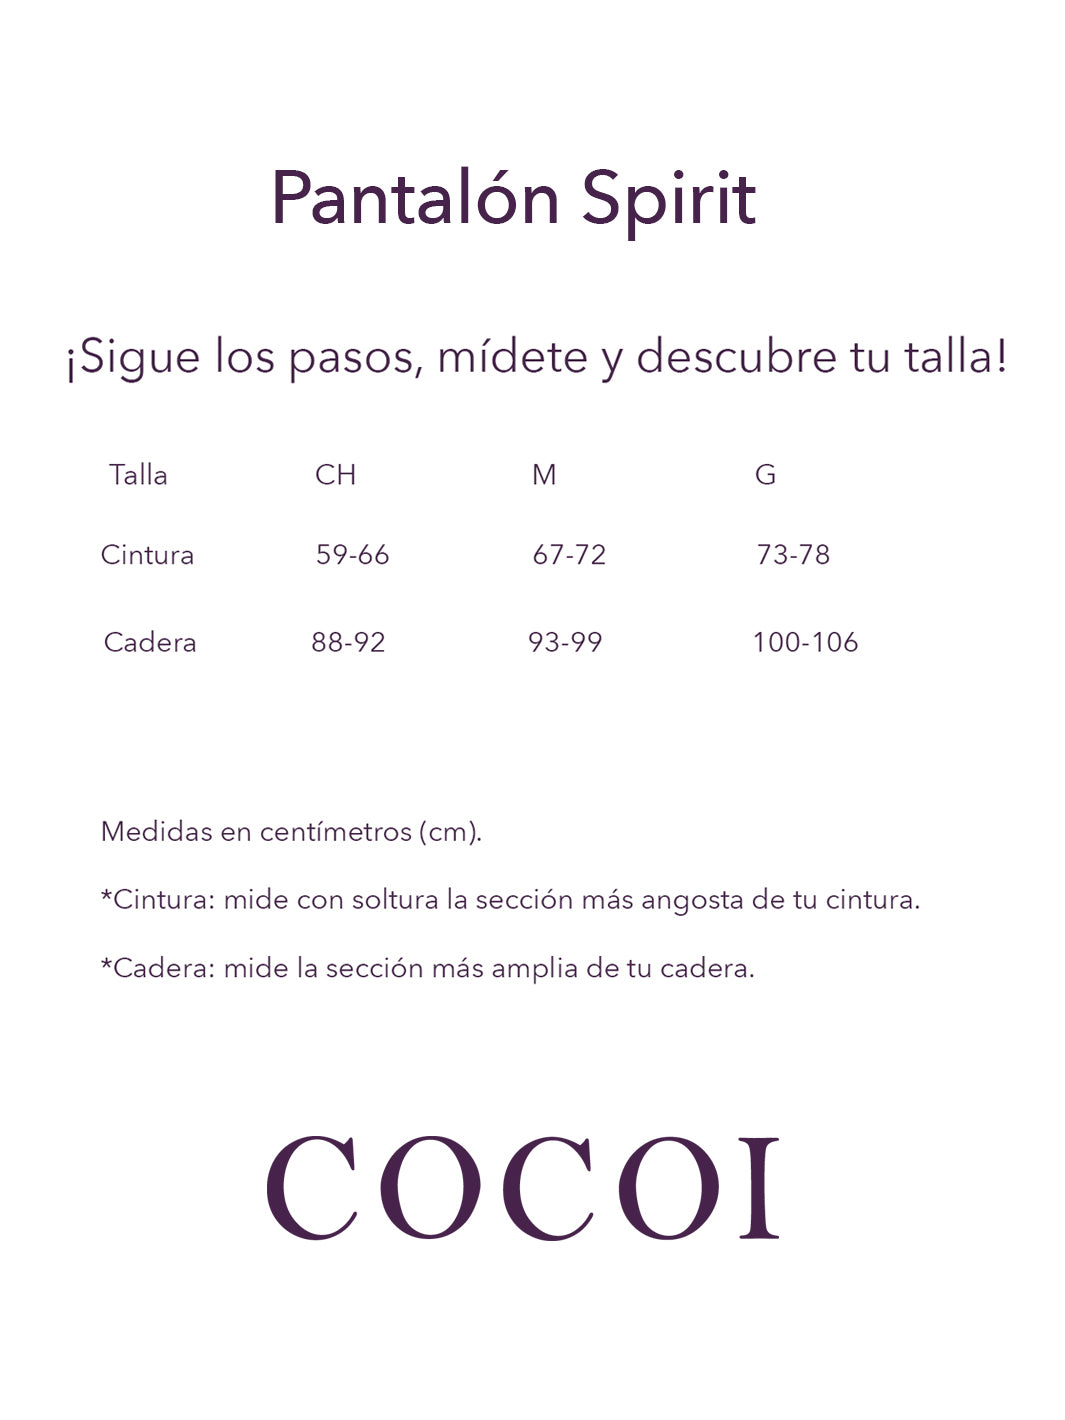 Pantalón Spirit Beige Cocoi